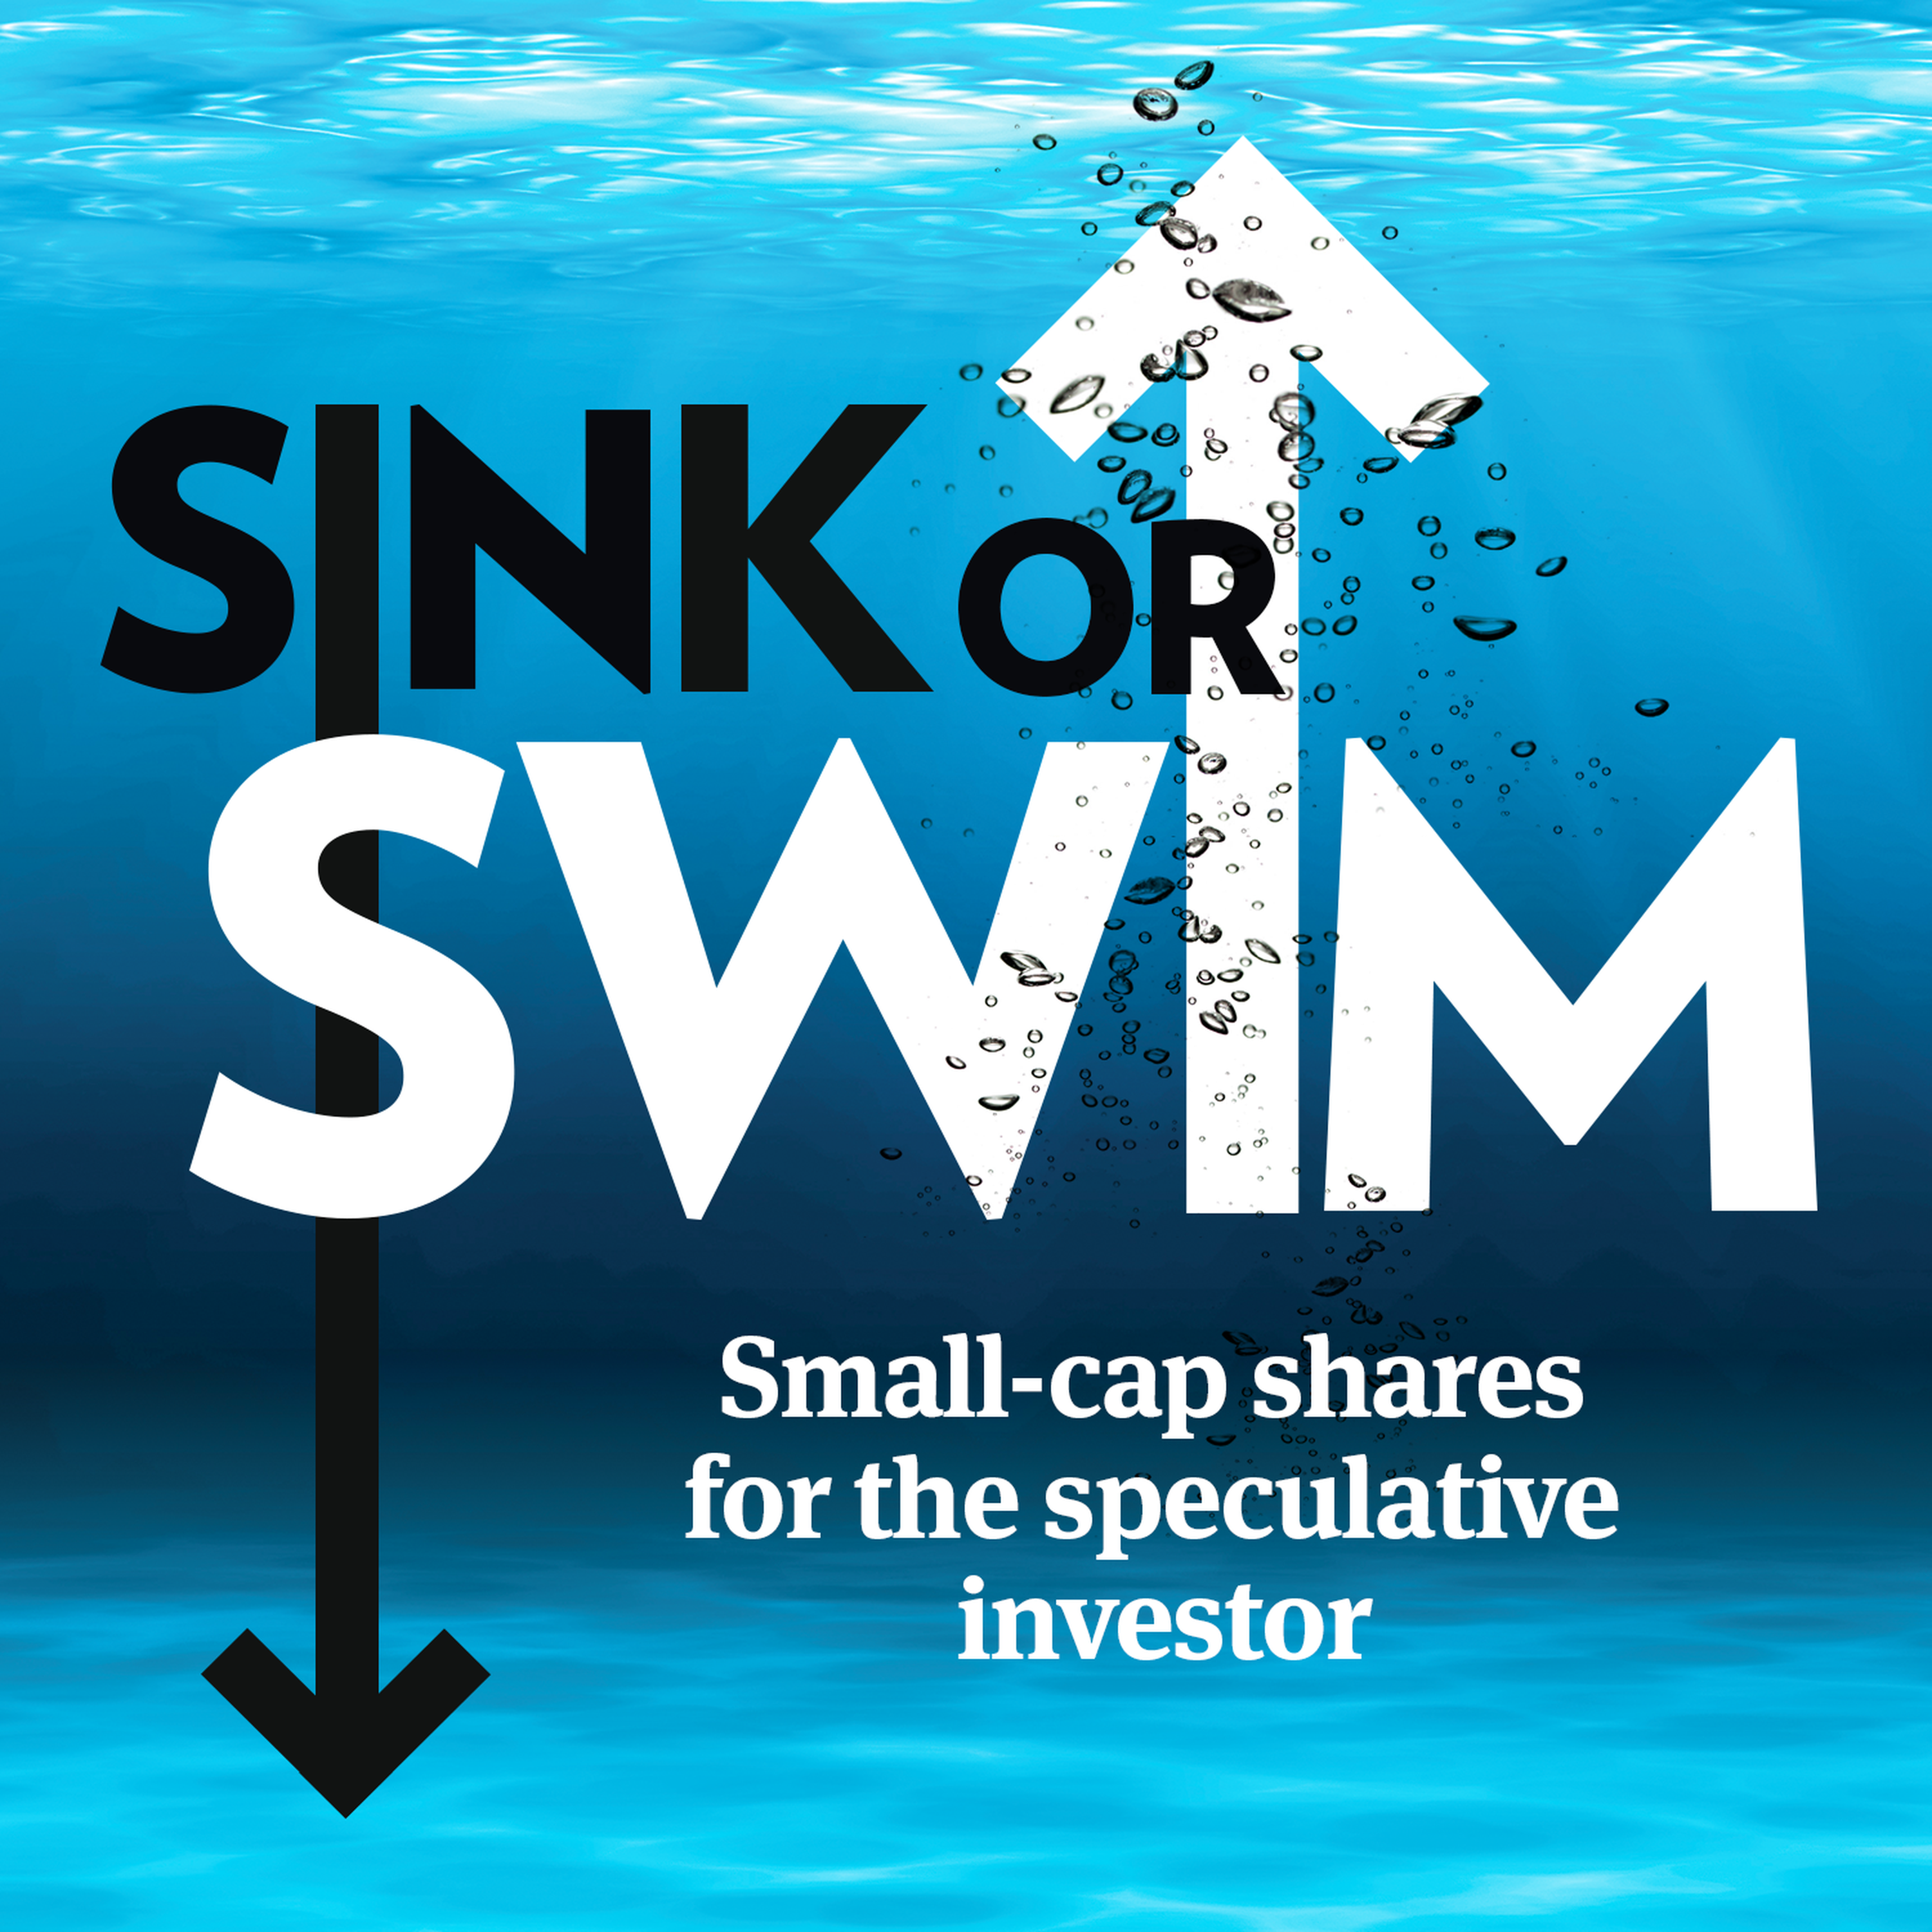 Companies & Markets Show: Sink or swim